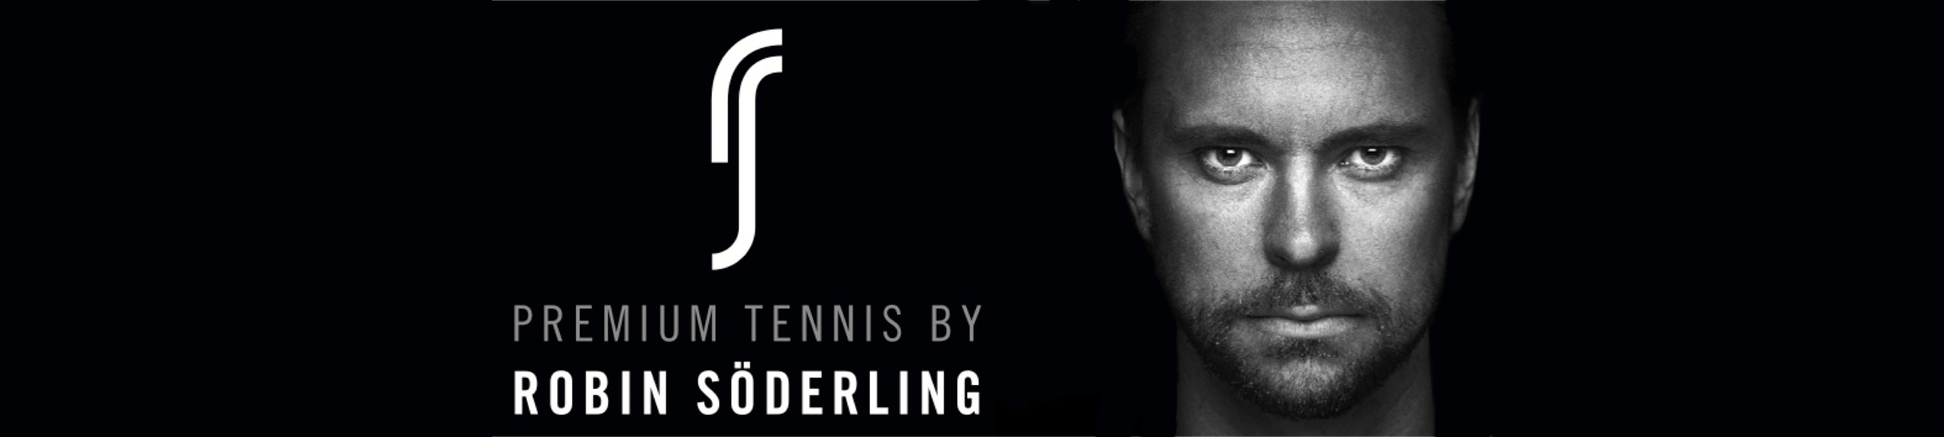 RS Tennis Thailand Robin Soderling